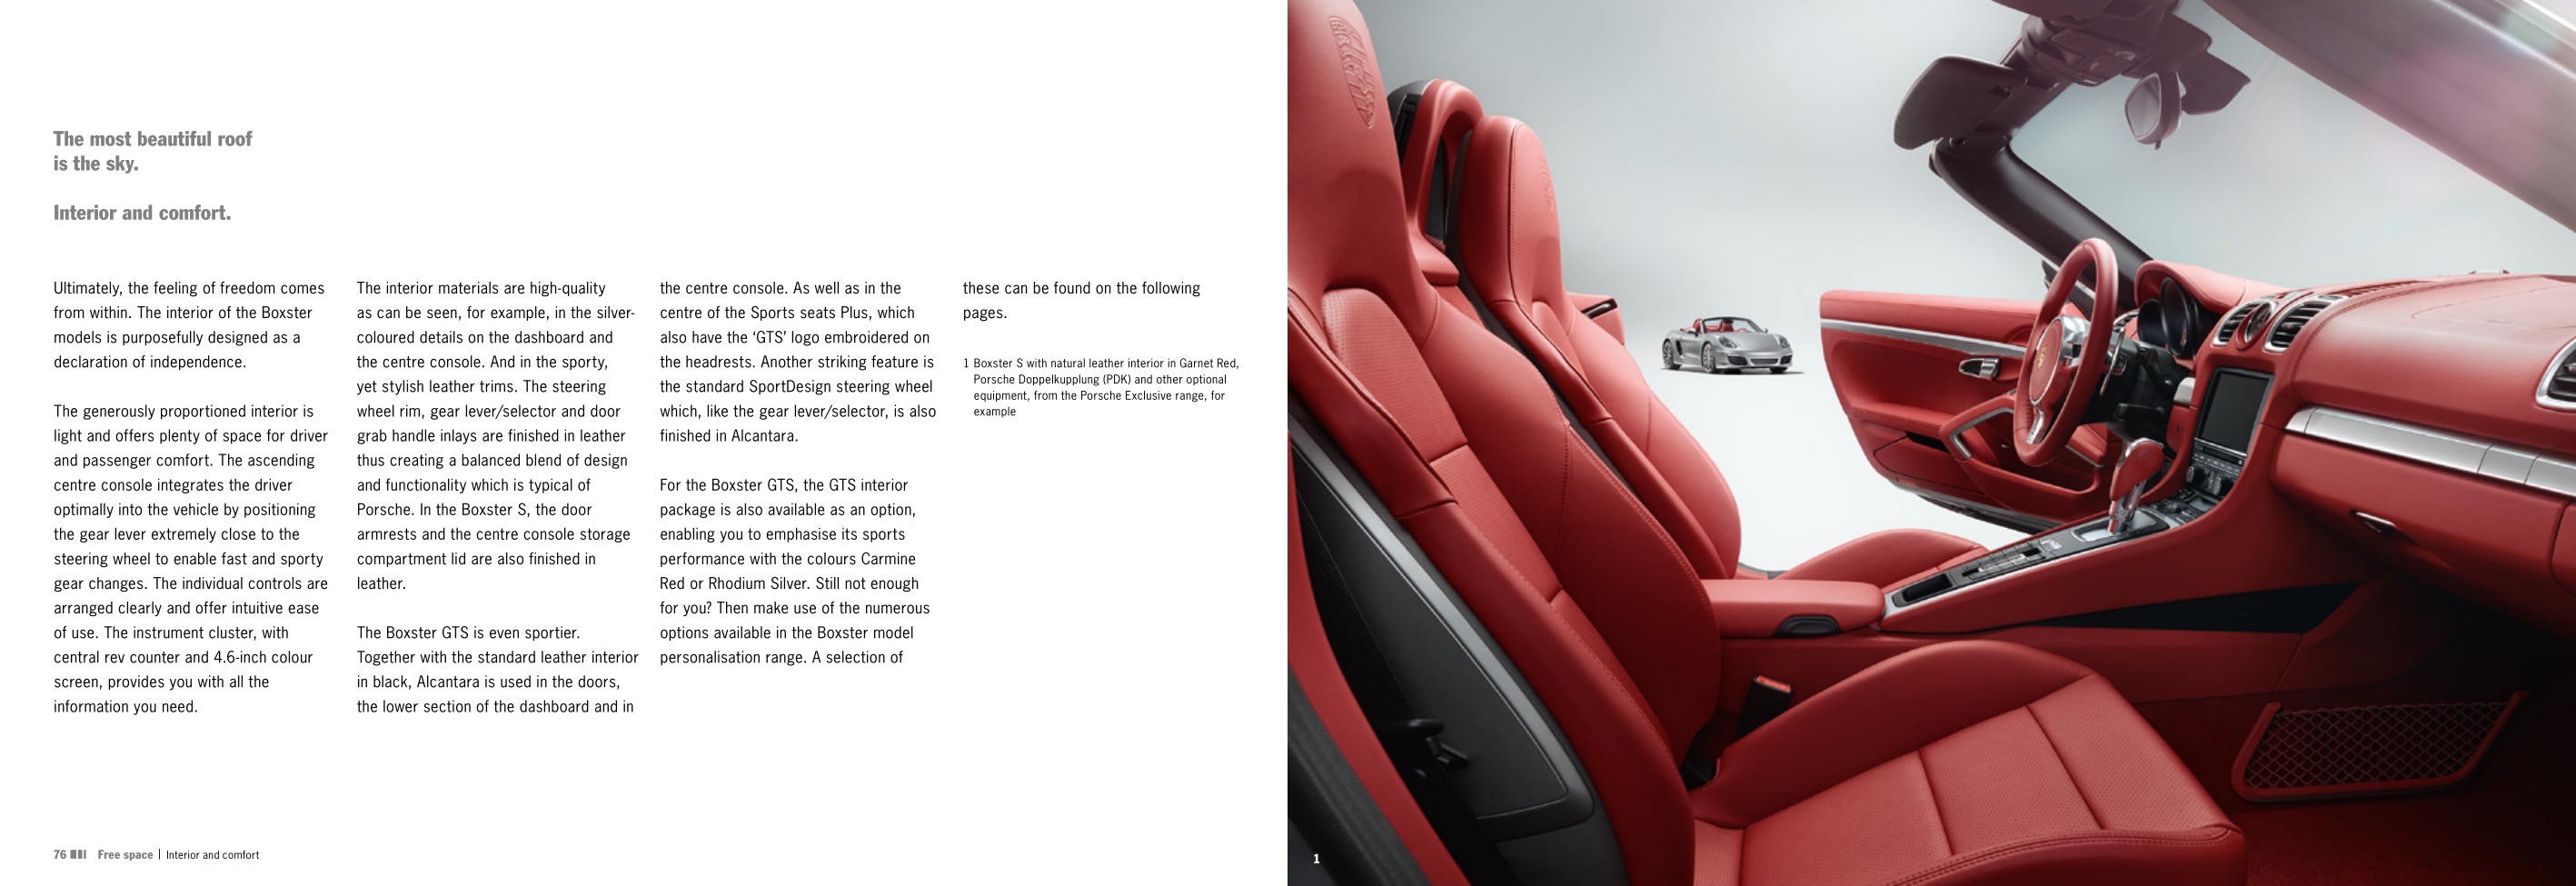 2015 Porsche Boxster Brochure Page 66